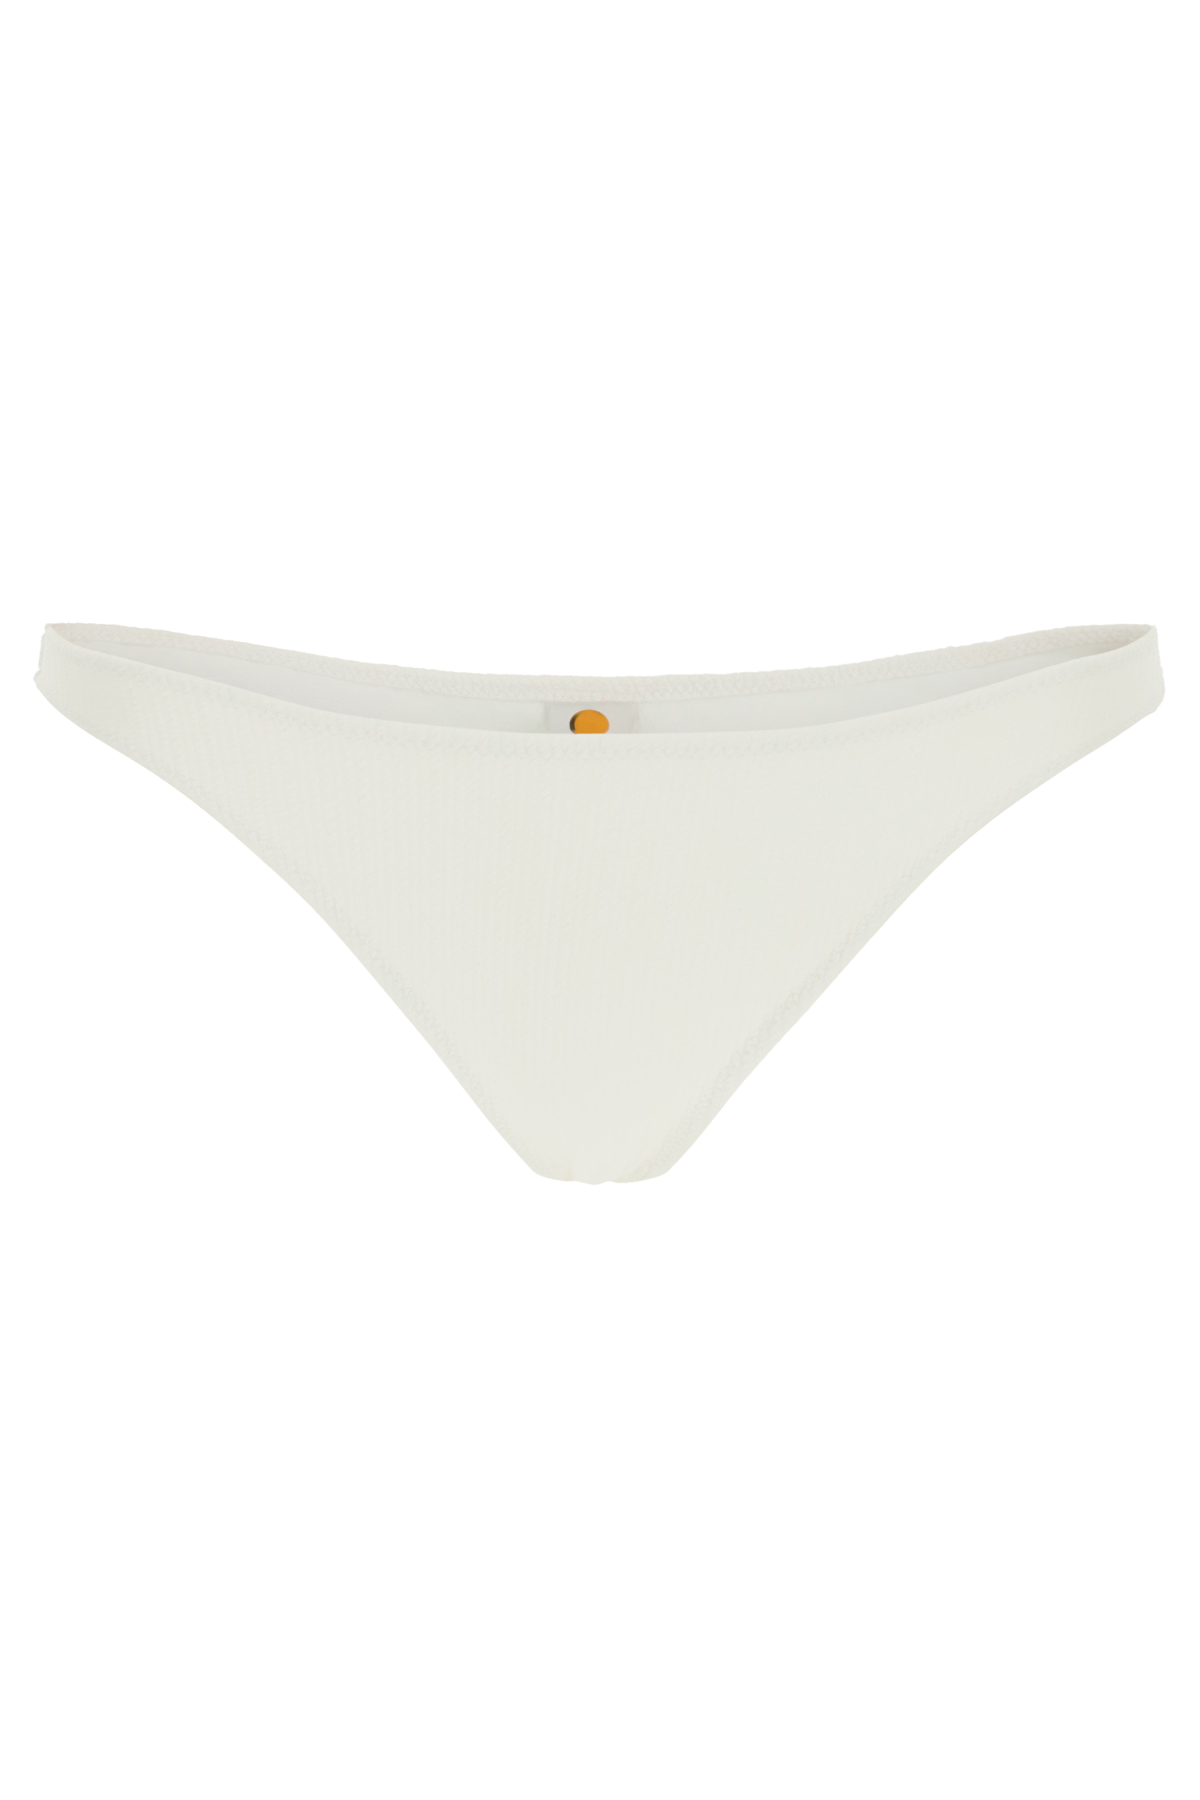 TROPIC of C TROPIC of C high-waisted bikini bottom